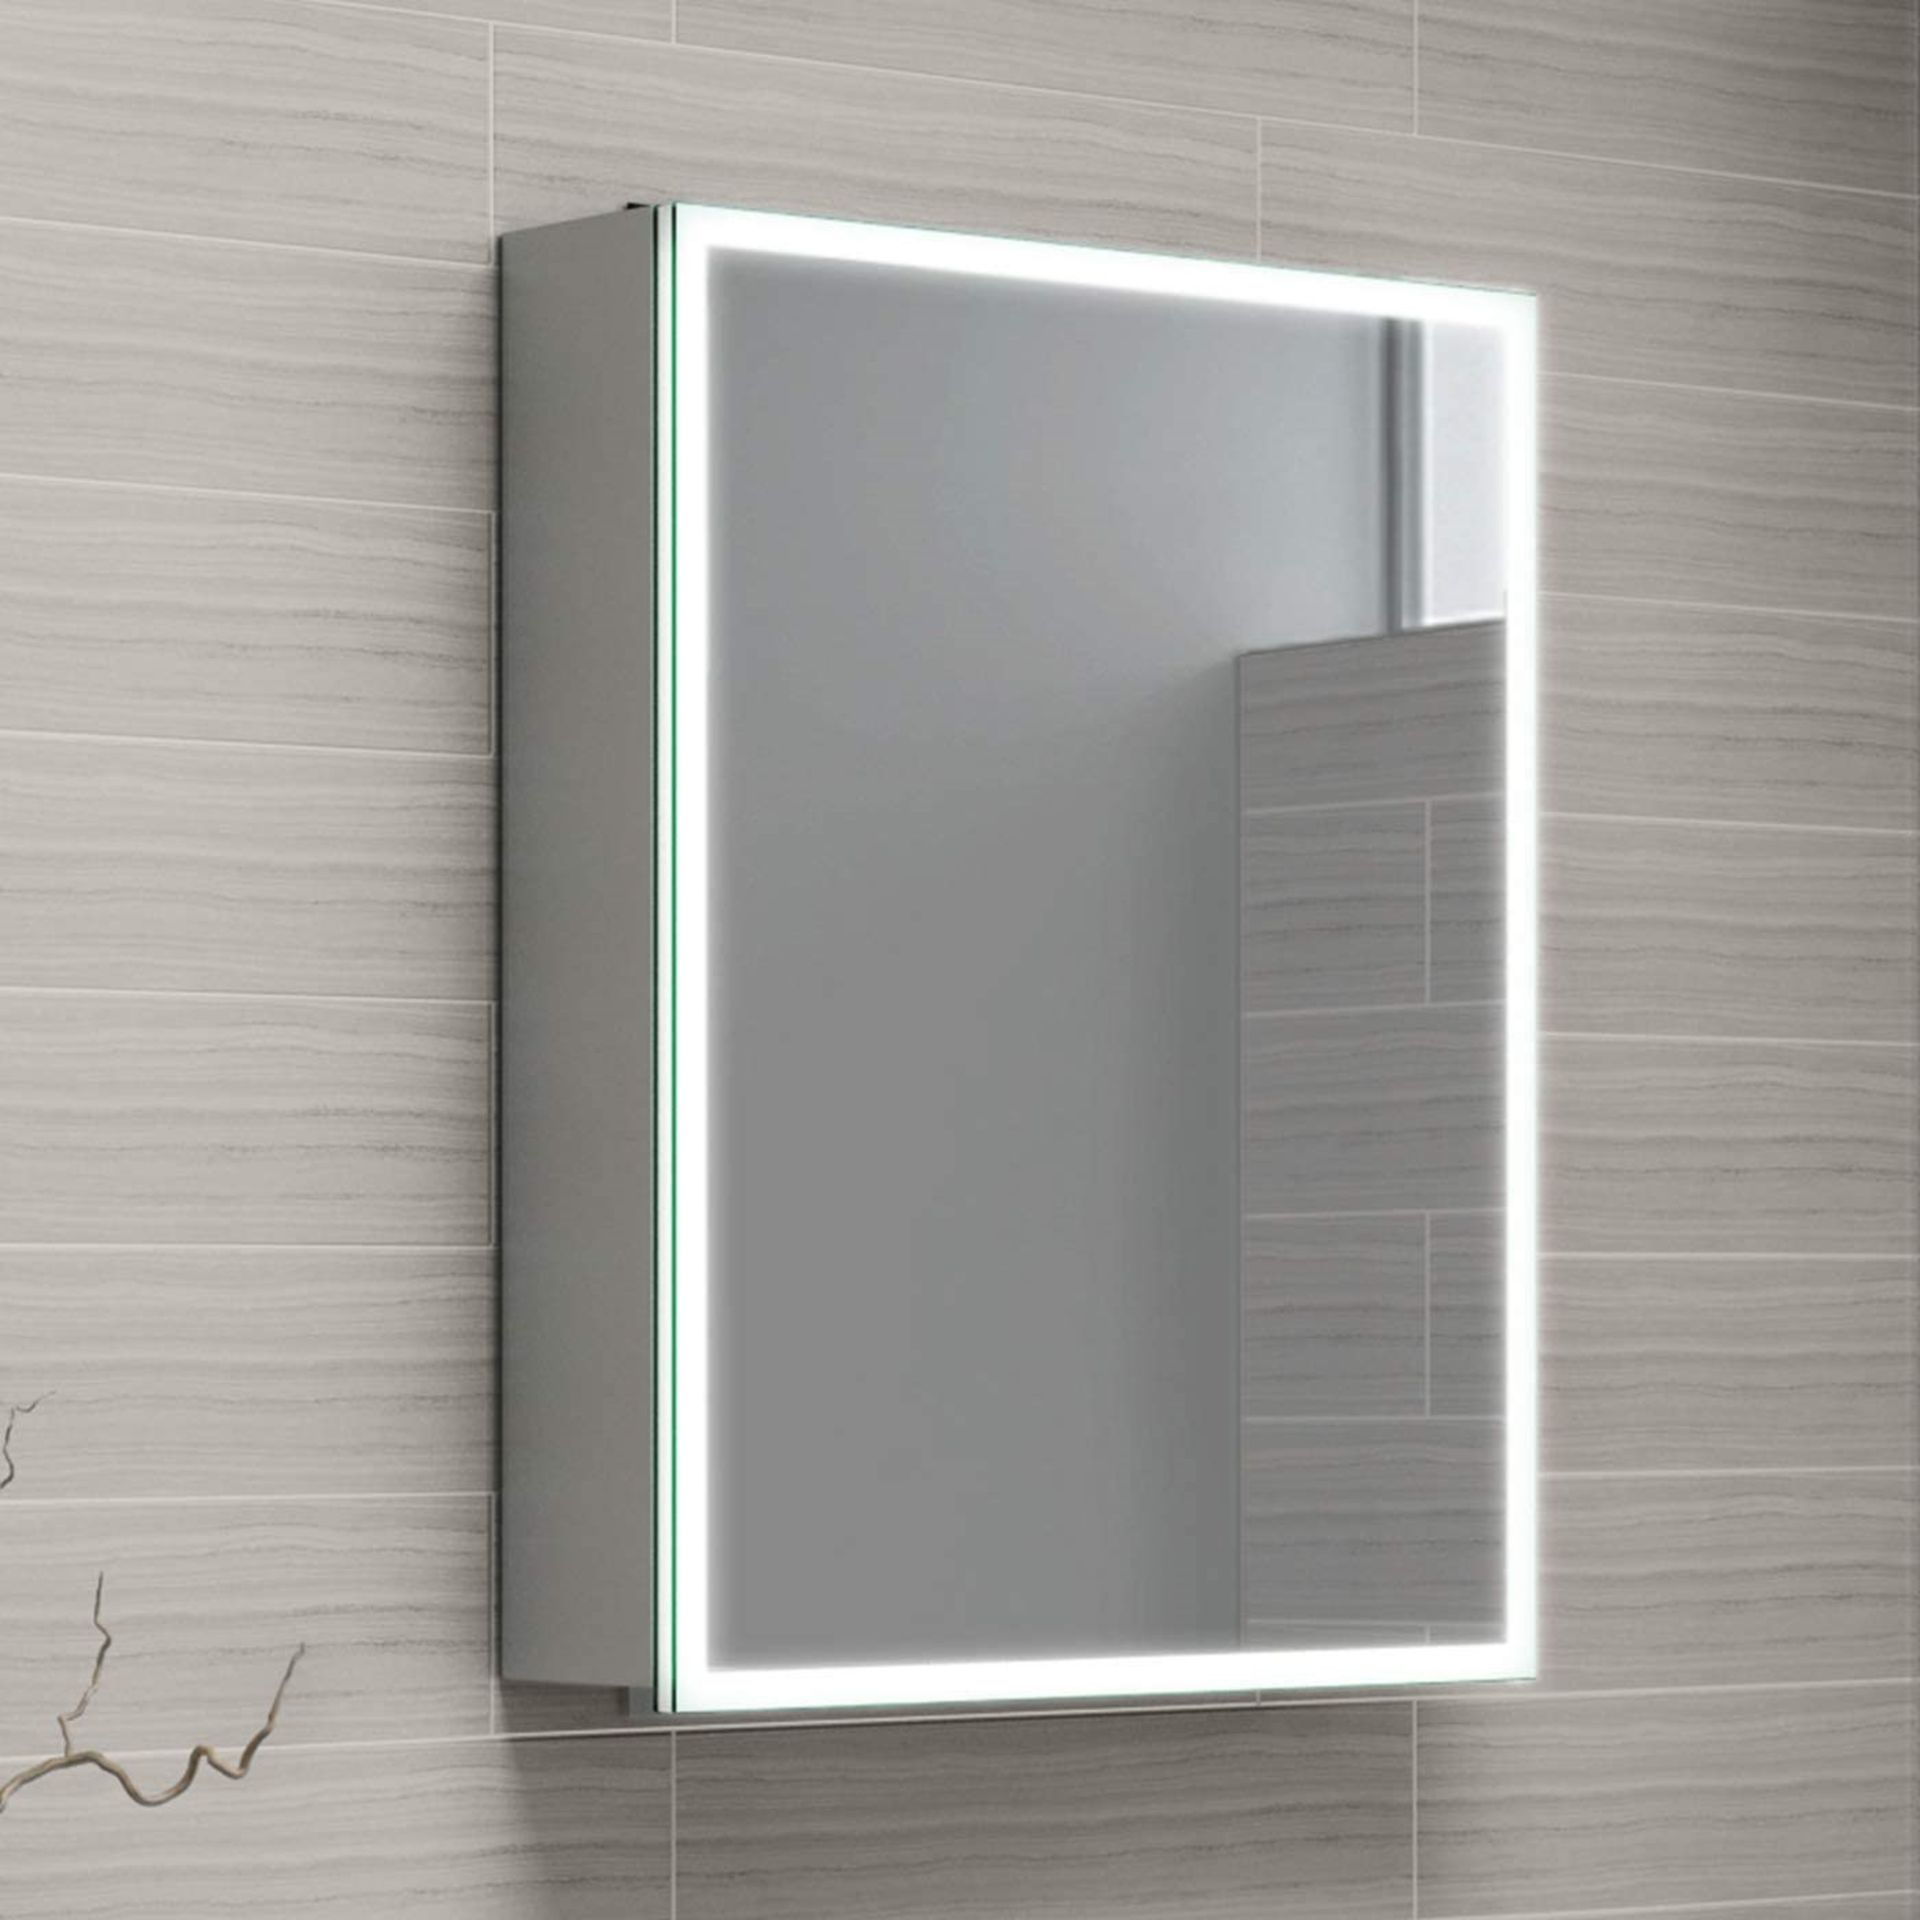 450x600 Cosmic Illuminated LED Mirror Cabinet. RRP £399.99.MC161.We love this mirror cabinet a... - Bild 3 aus 3